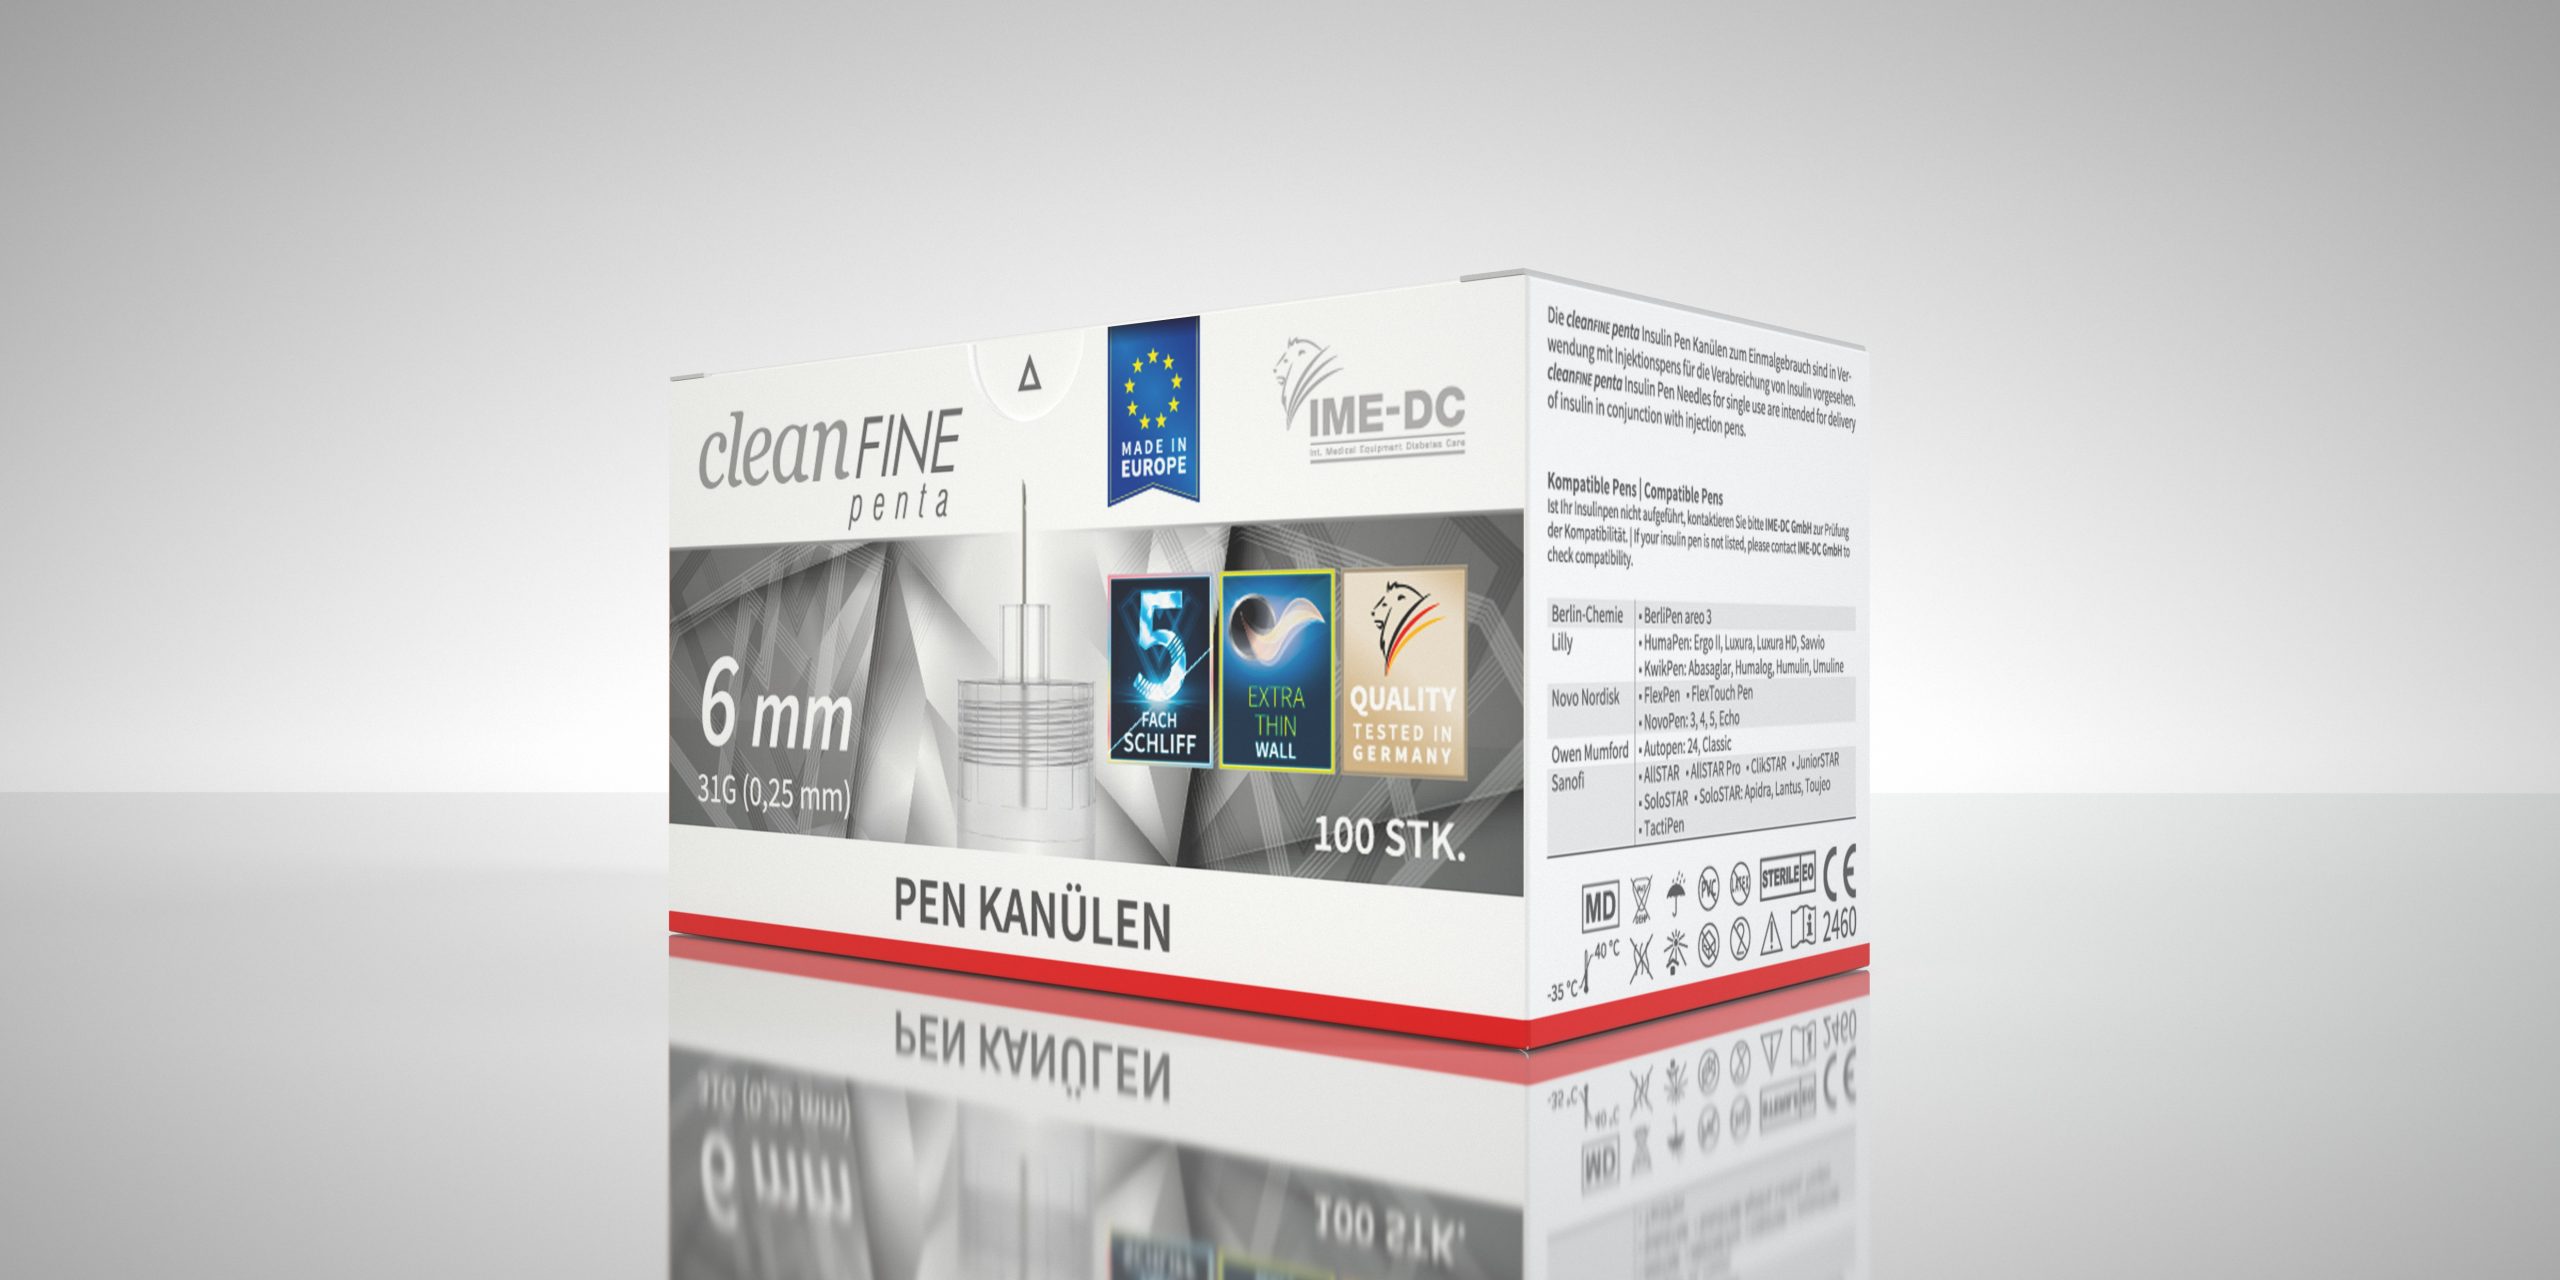 cleanFINE penta 6mm